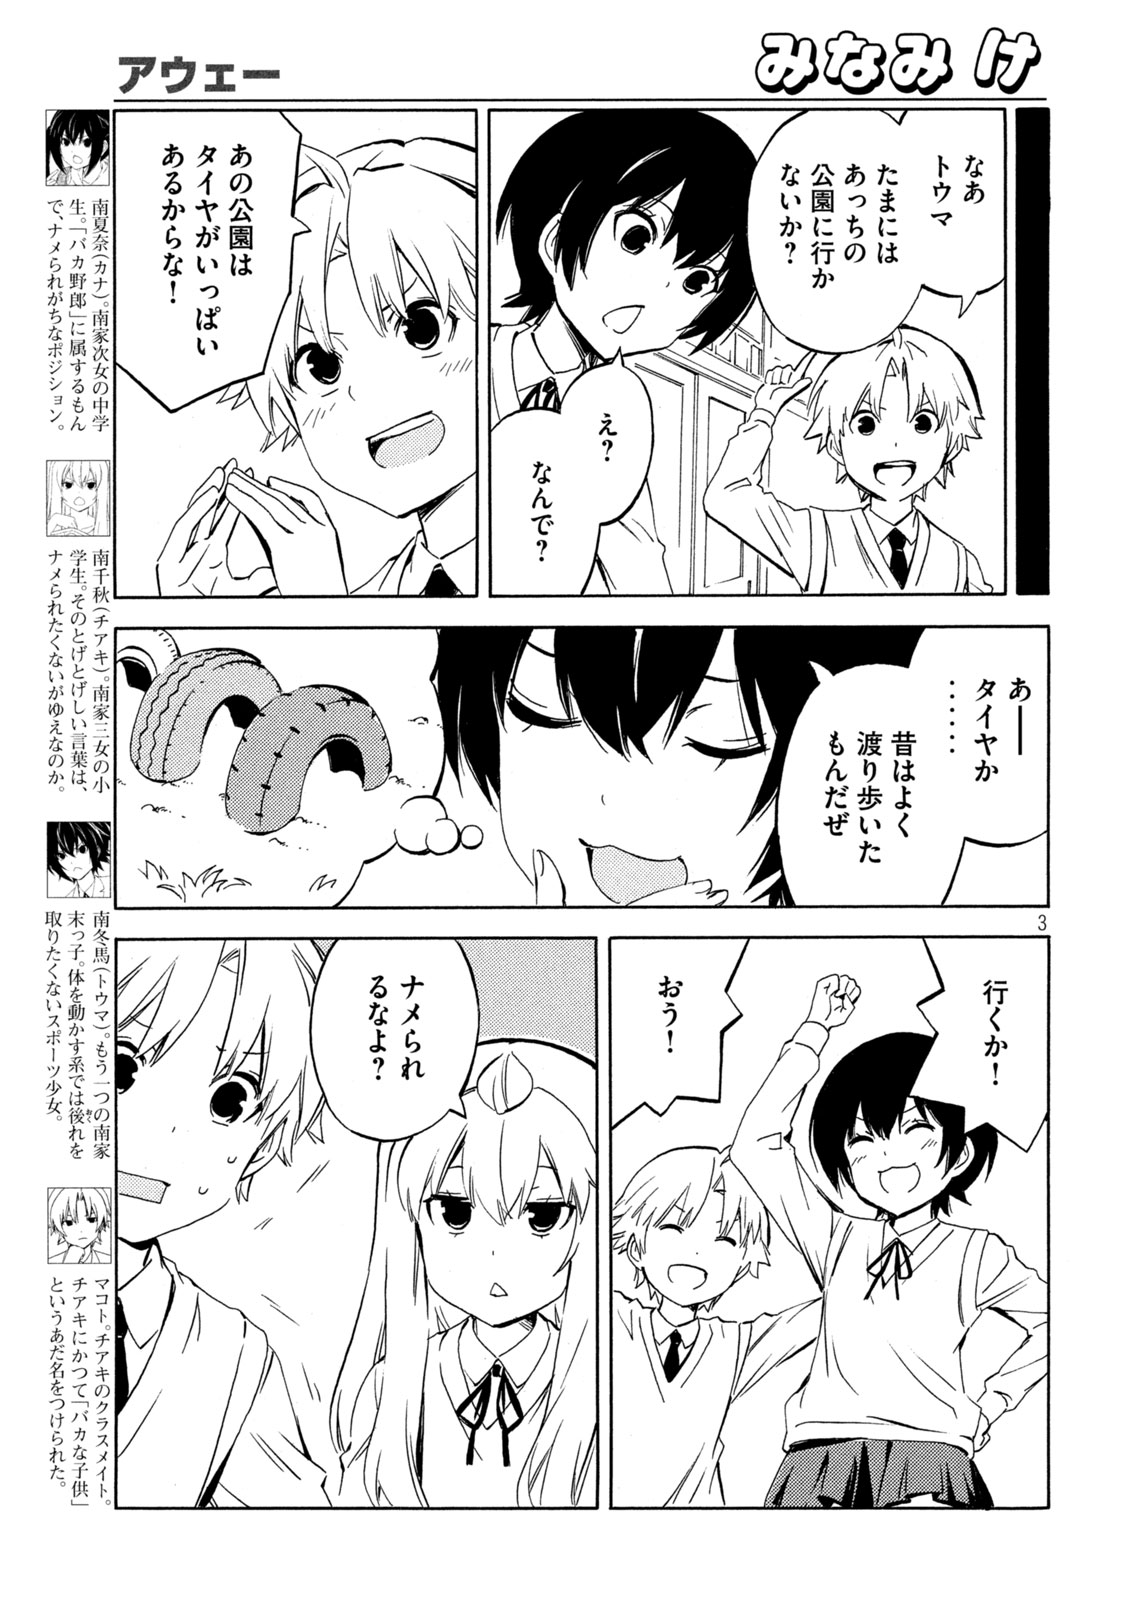 Minami-ke - Chapter 488 - Page 3